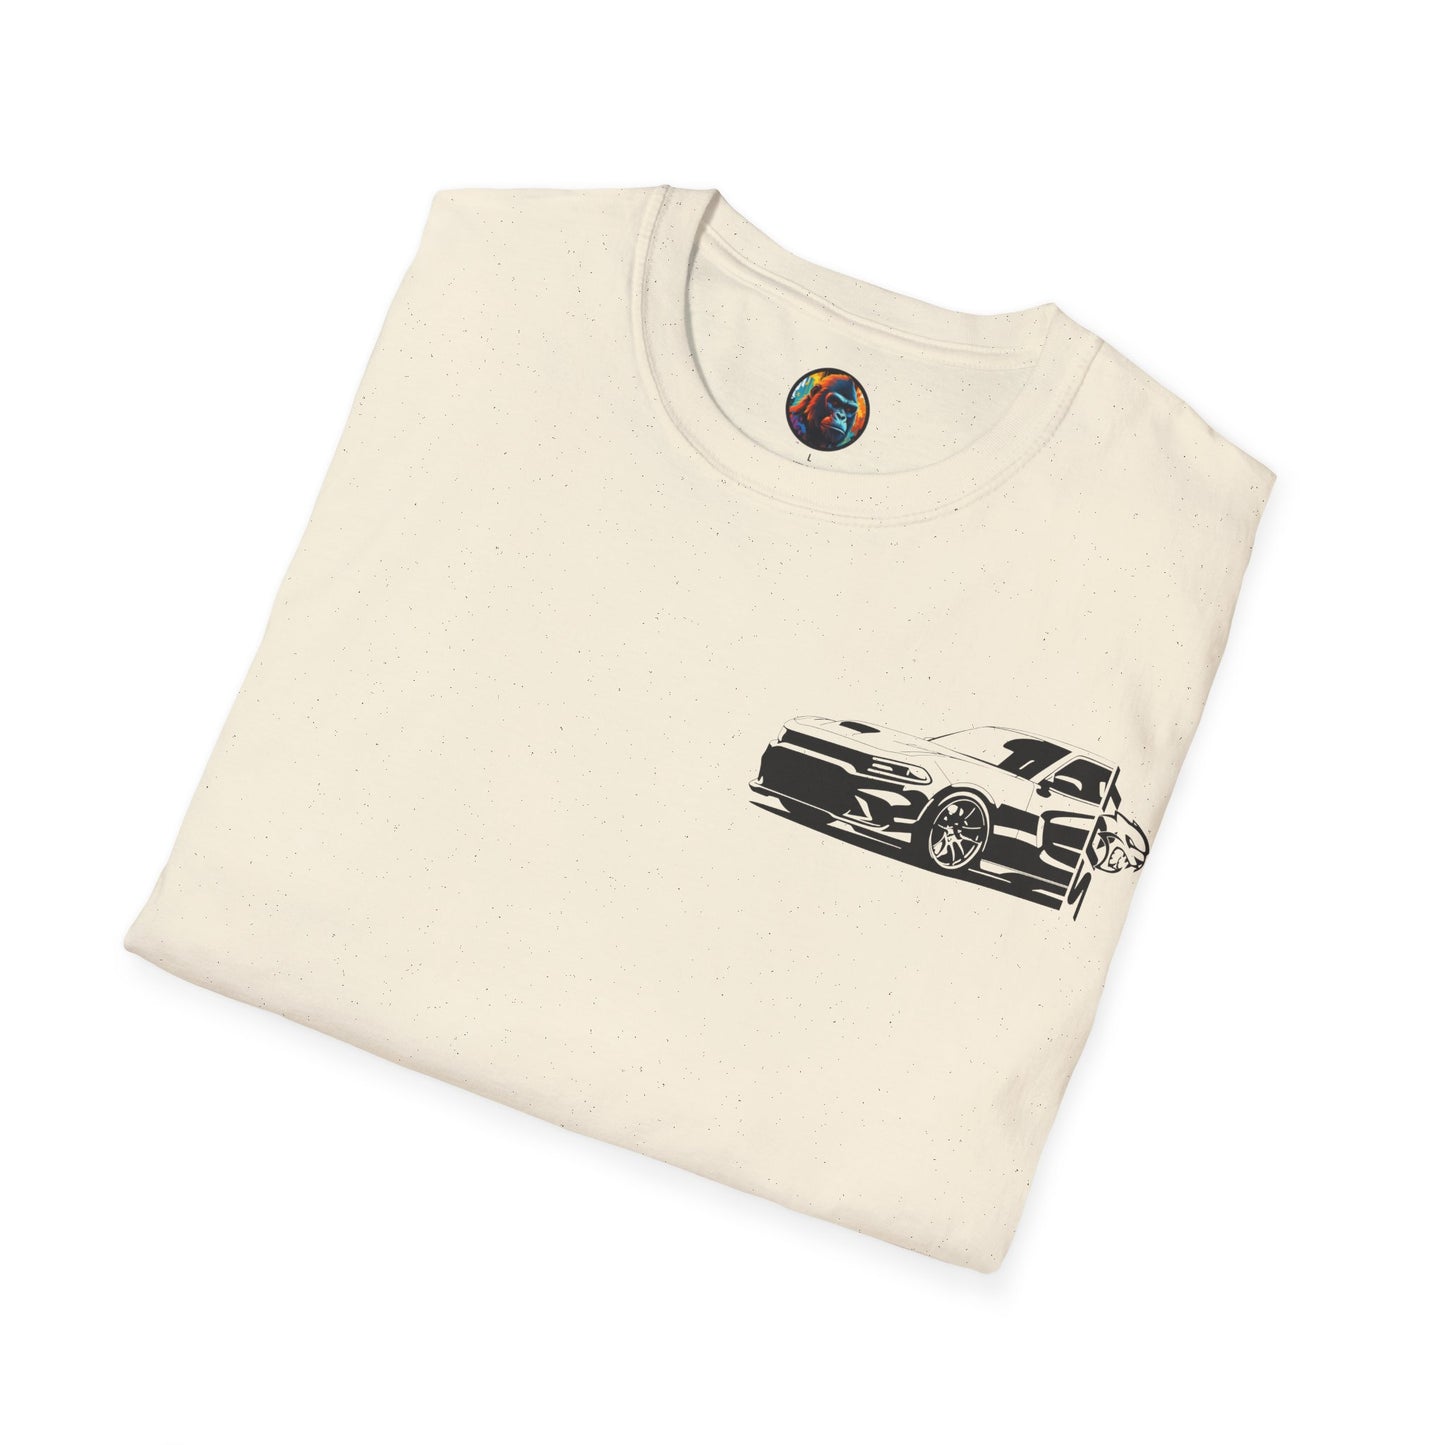 SRT Charger Hellcat Silhouette T-Shirt